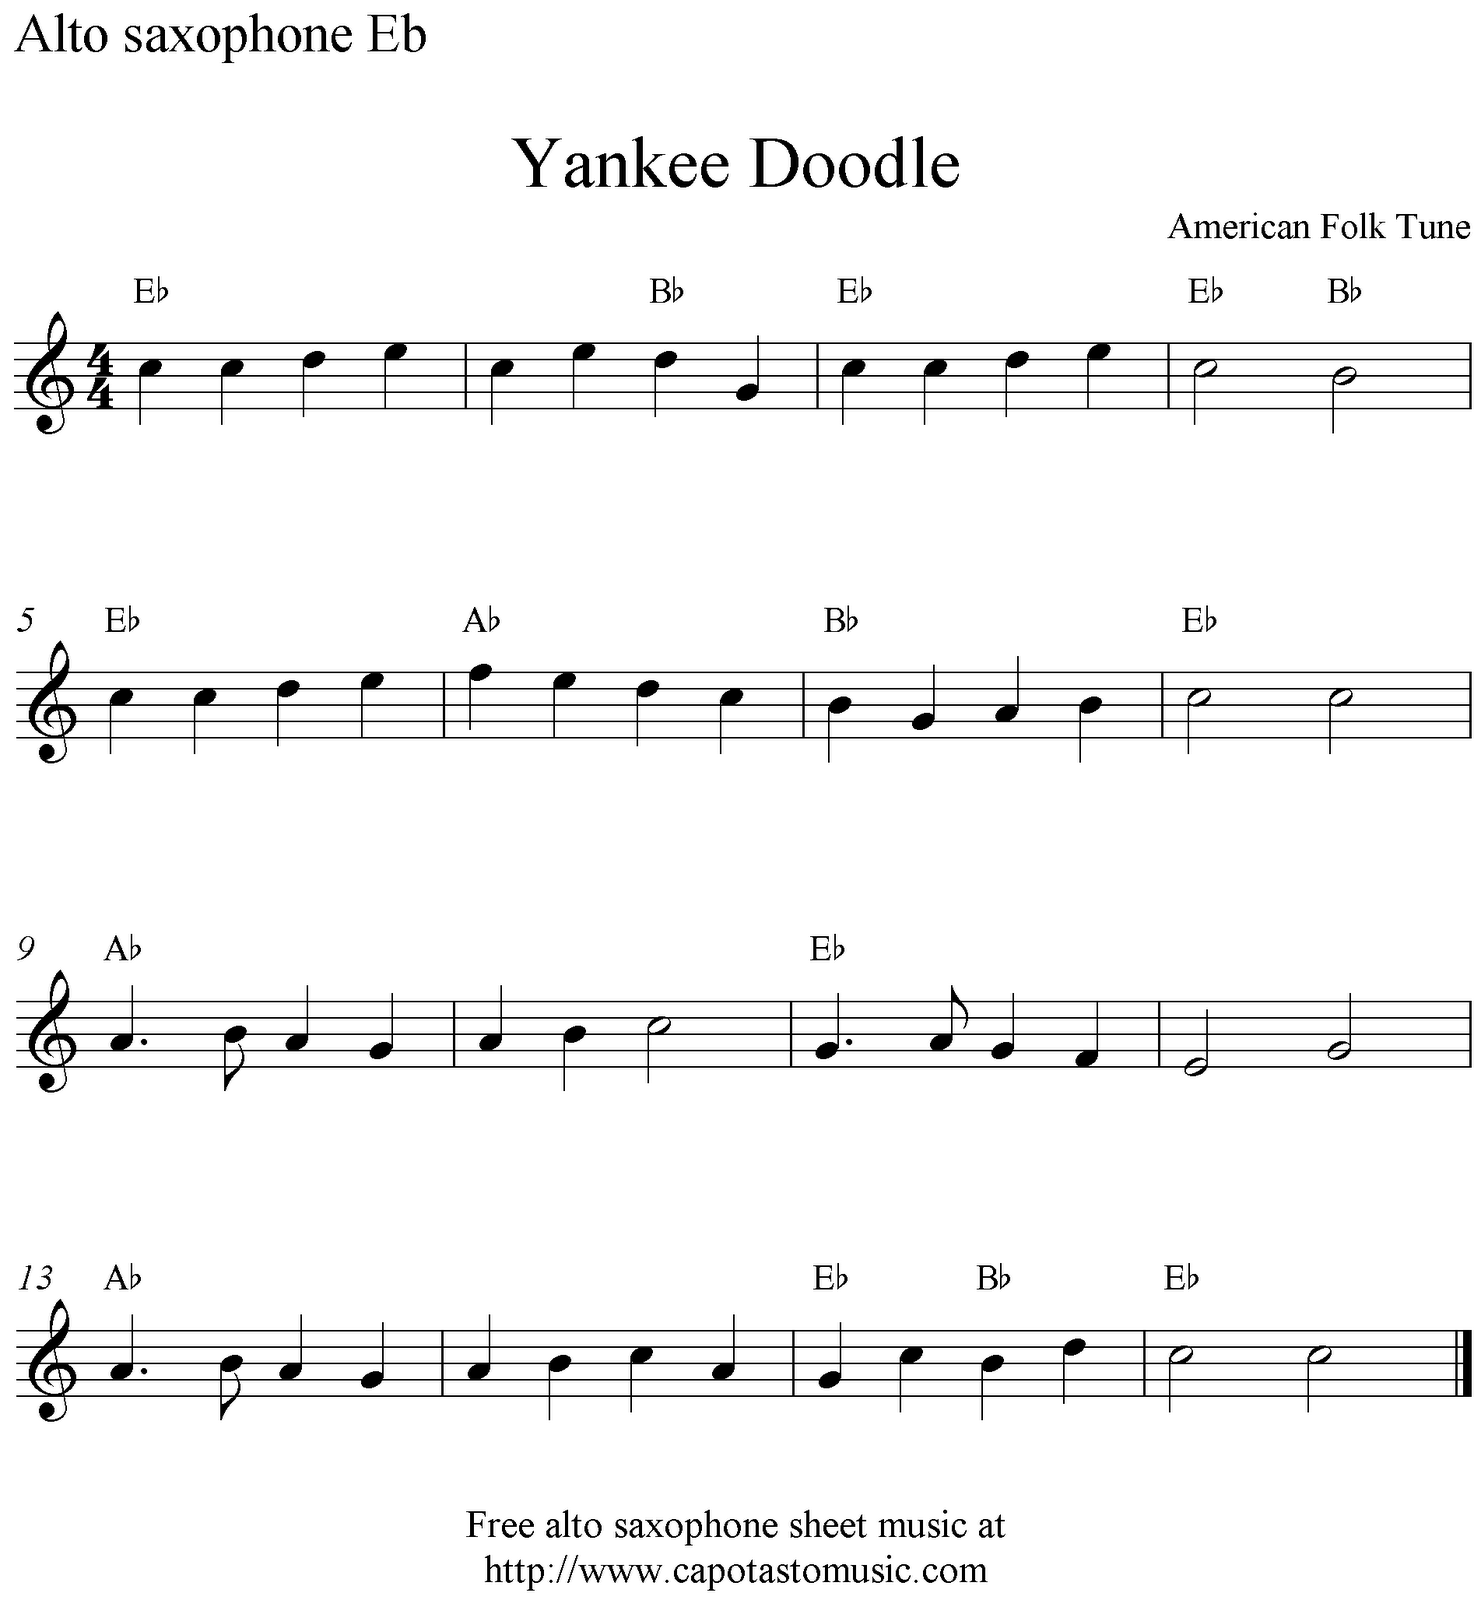 Yankee Doodle Free Alto Saxophone Sheet Music Notes